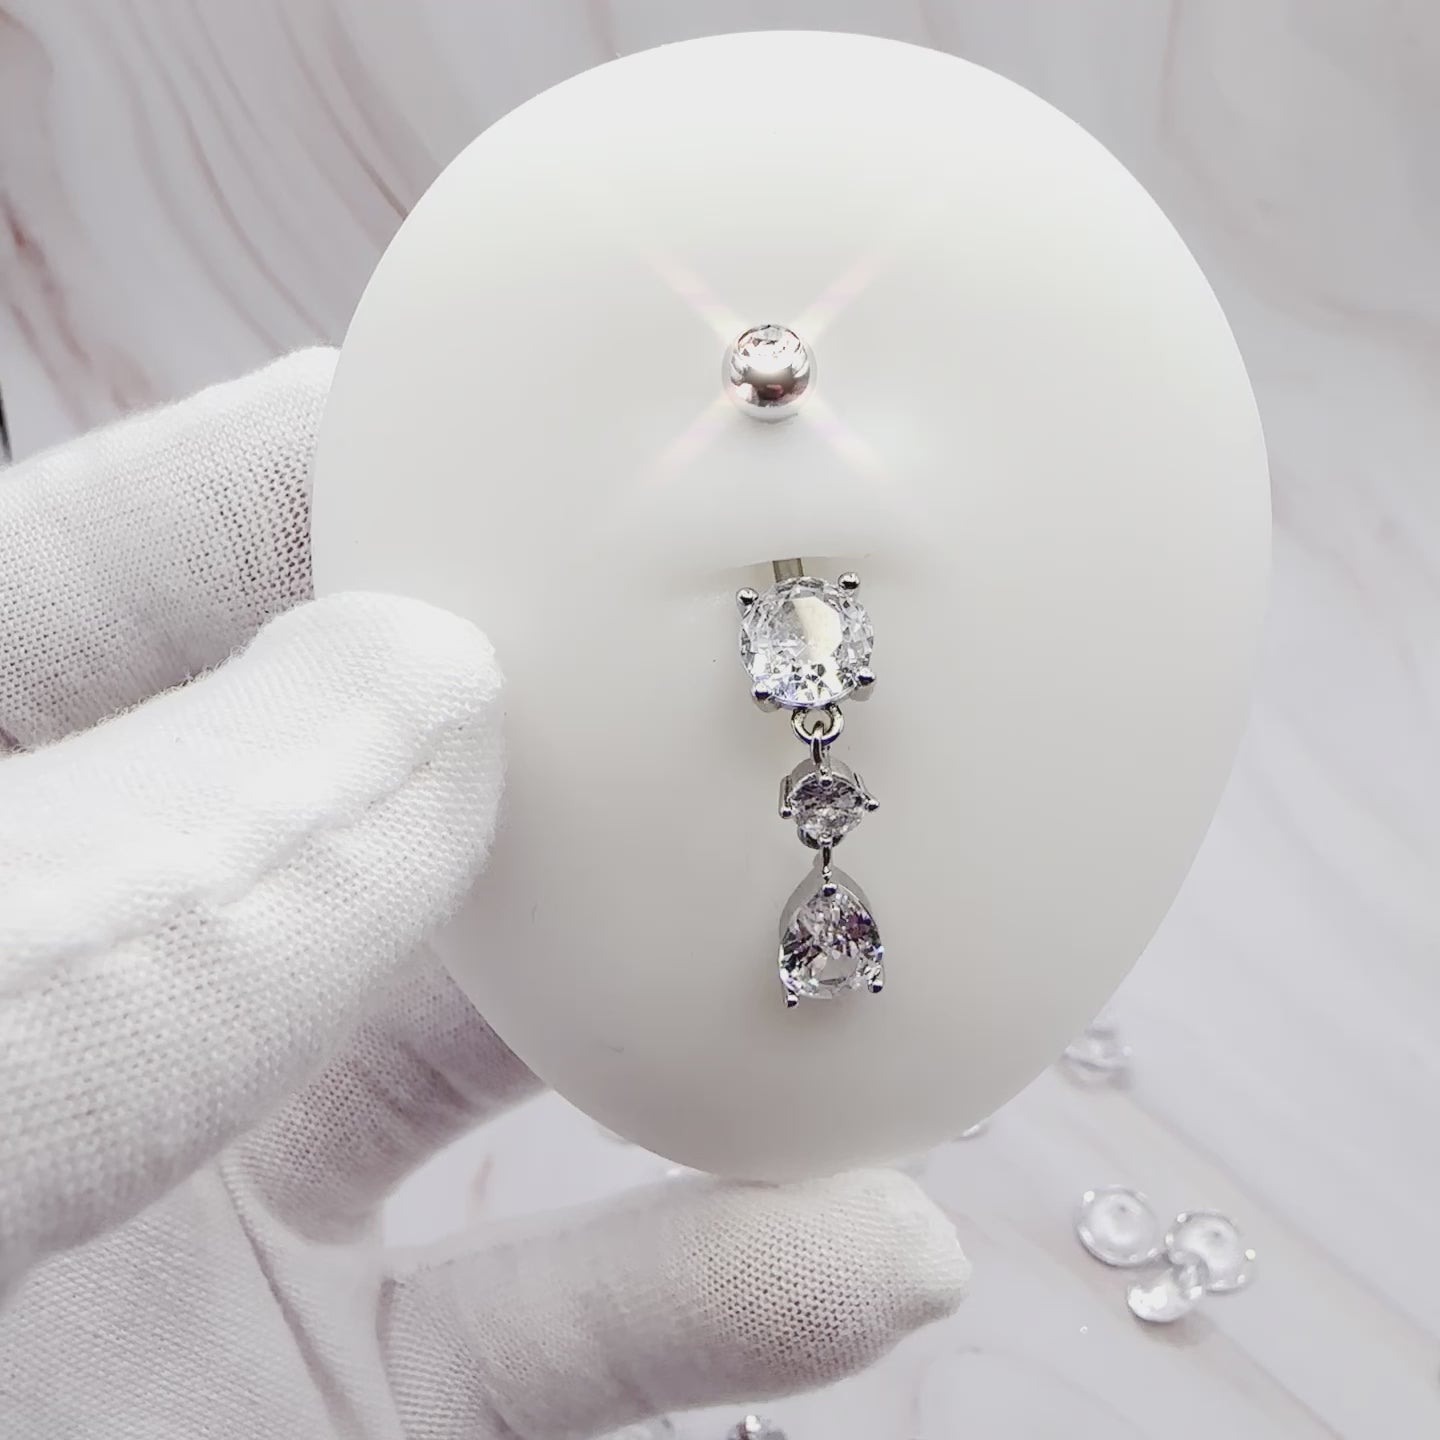 14 Gauge Double Dangling Crystal Teardrop Belly Bar - Silver Product Video